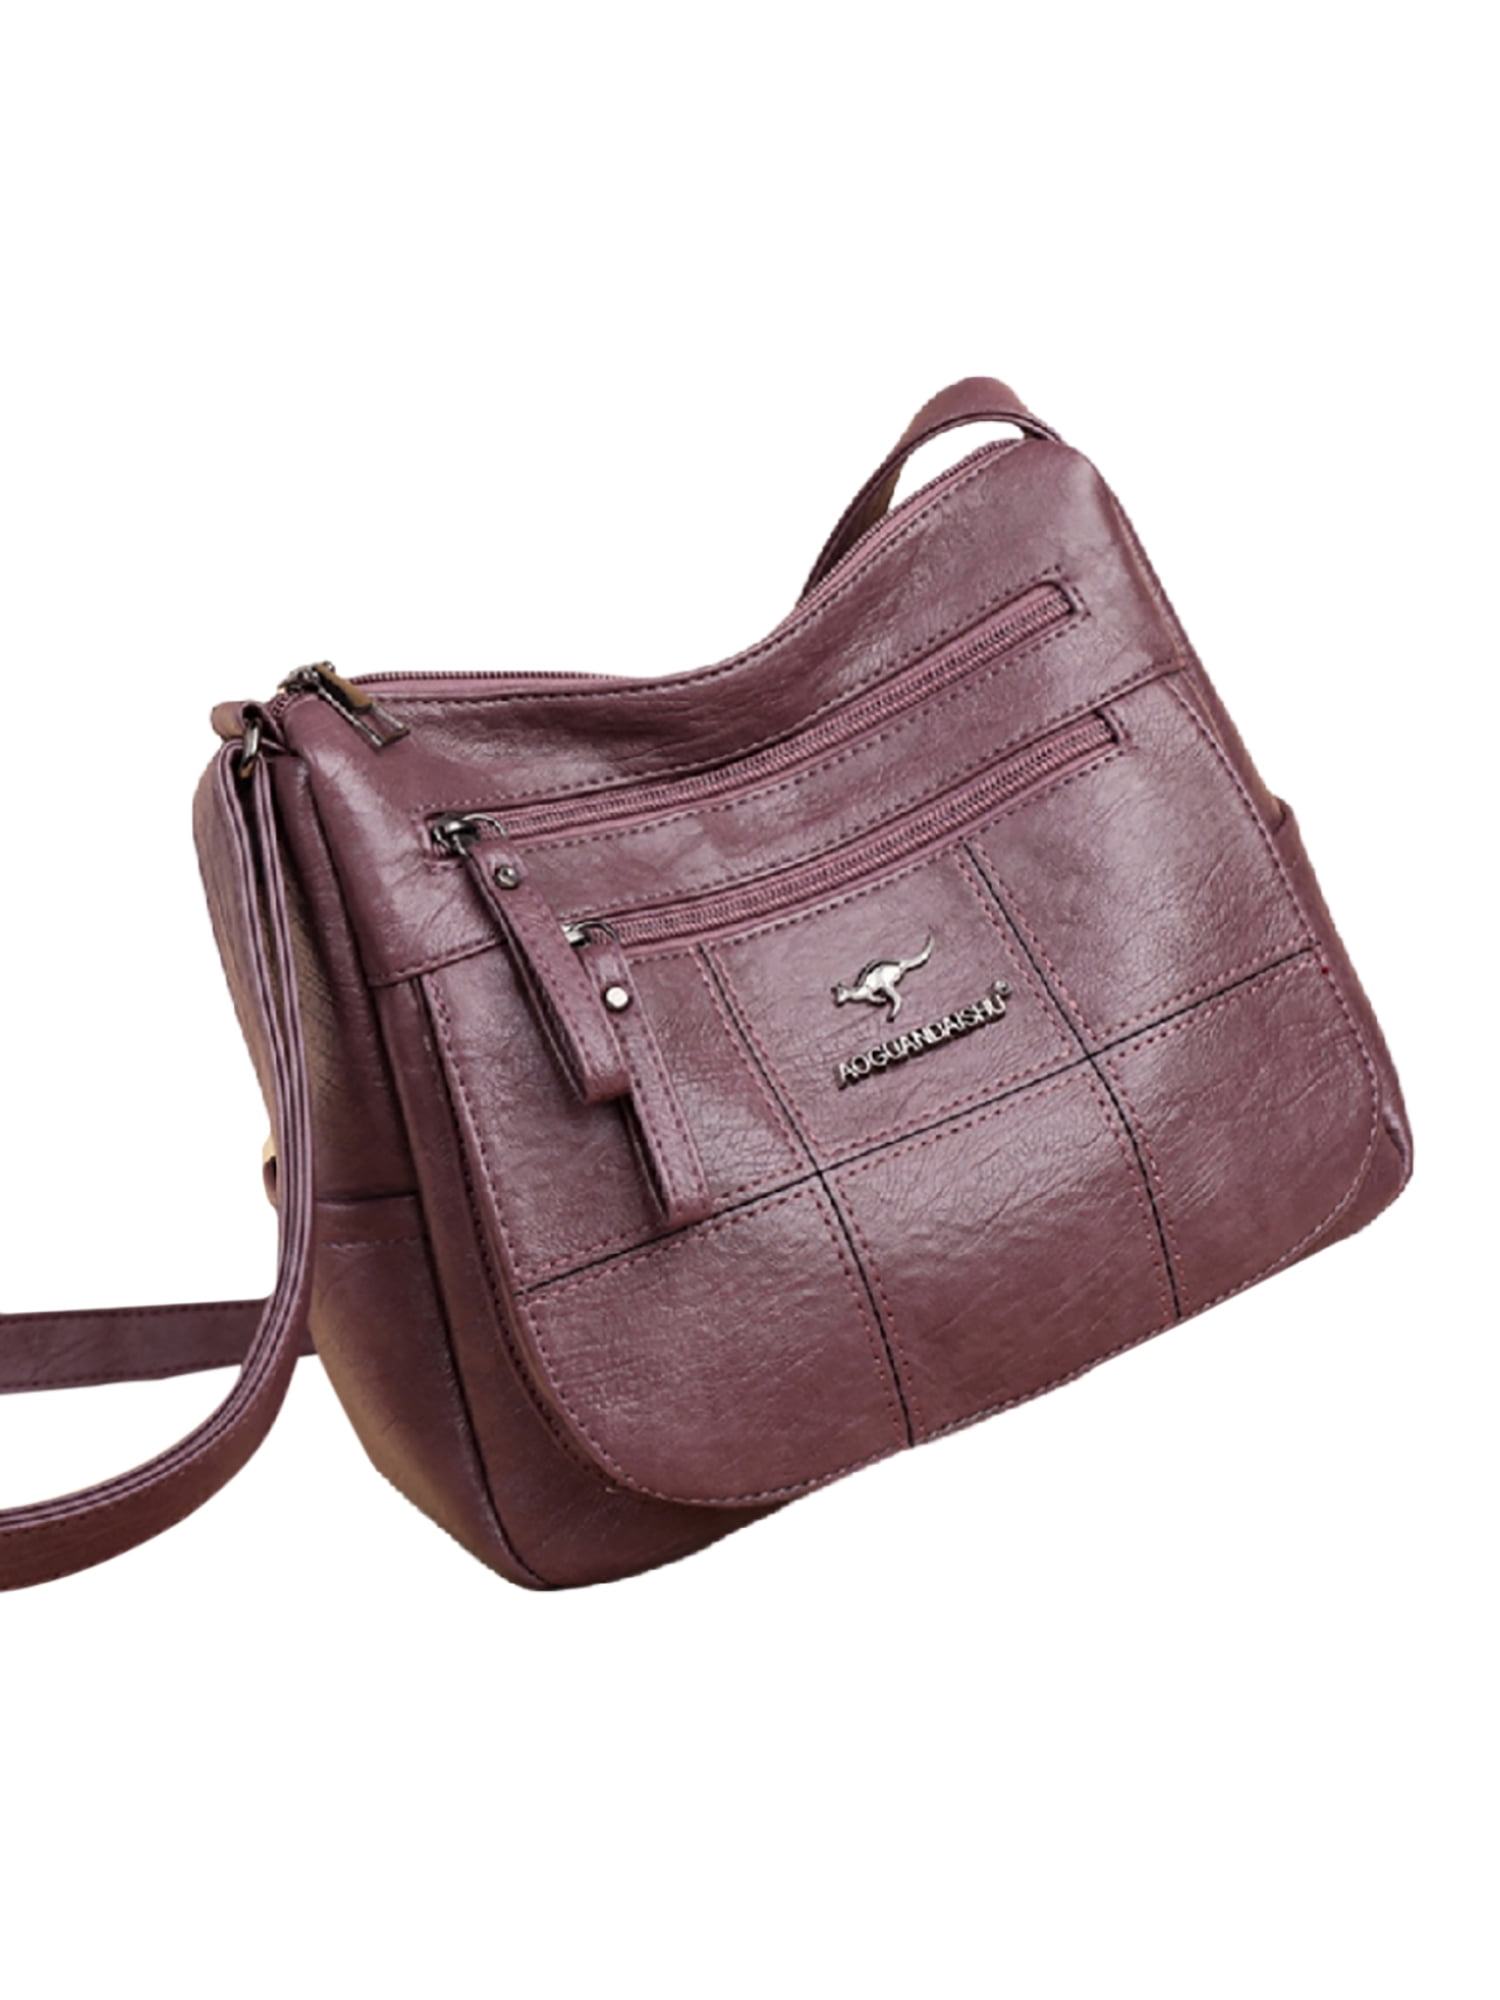 Innerwin Women Purse Multi Pockets Shoulder Bags Large Capacity